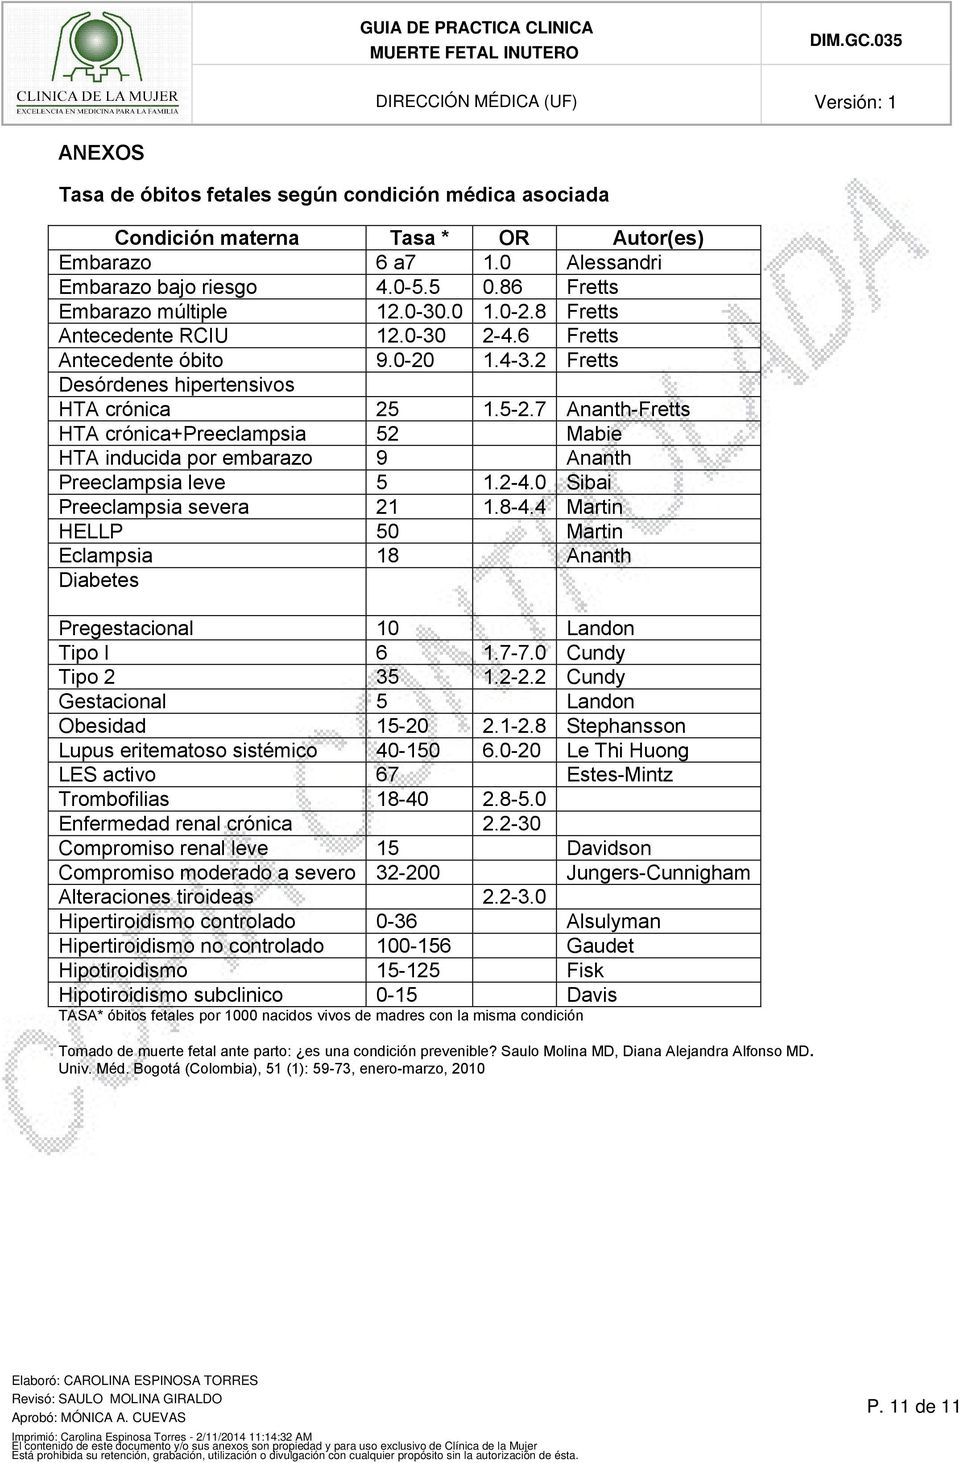 7 Ananth-Fretts HTA crónica+preeclampsia 52 Mabie HTA inducida por embarazo 9 Ananth Preeclampsia leve 5 1.2-4.0 Sibai Preeclampsia severa 21 1.8-4.